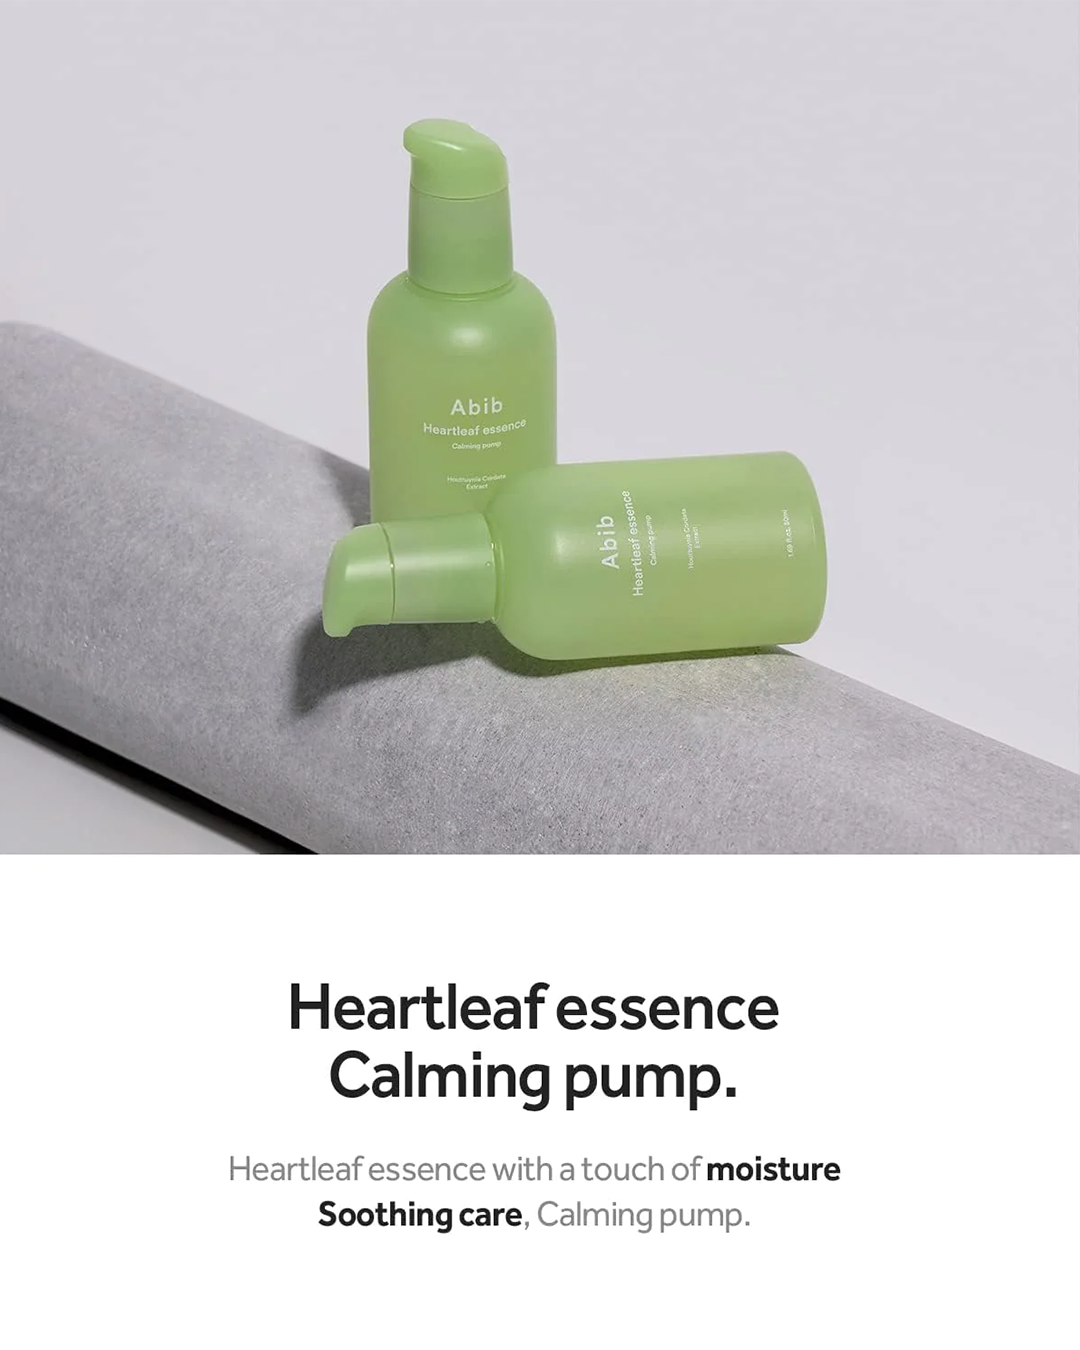 [Abib] Heartleaf Essence Calming Pump